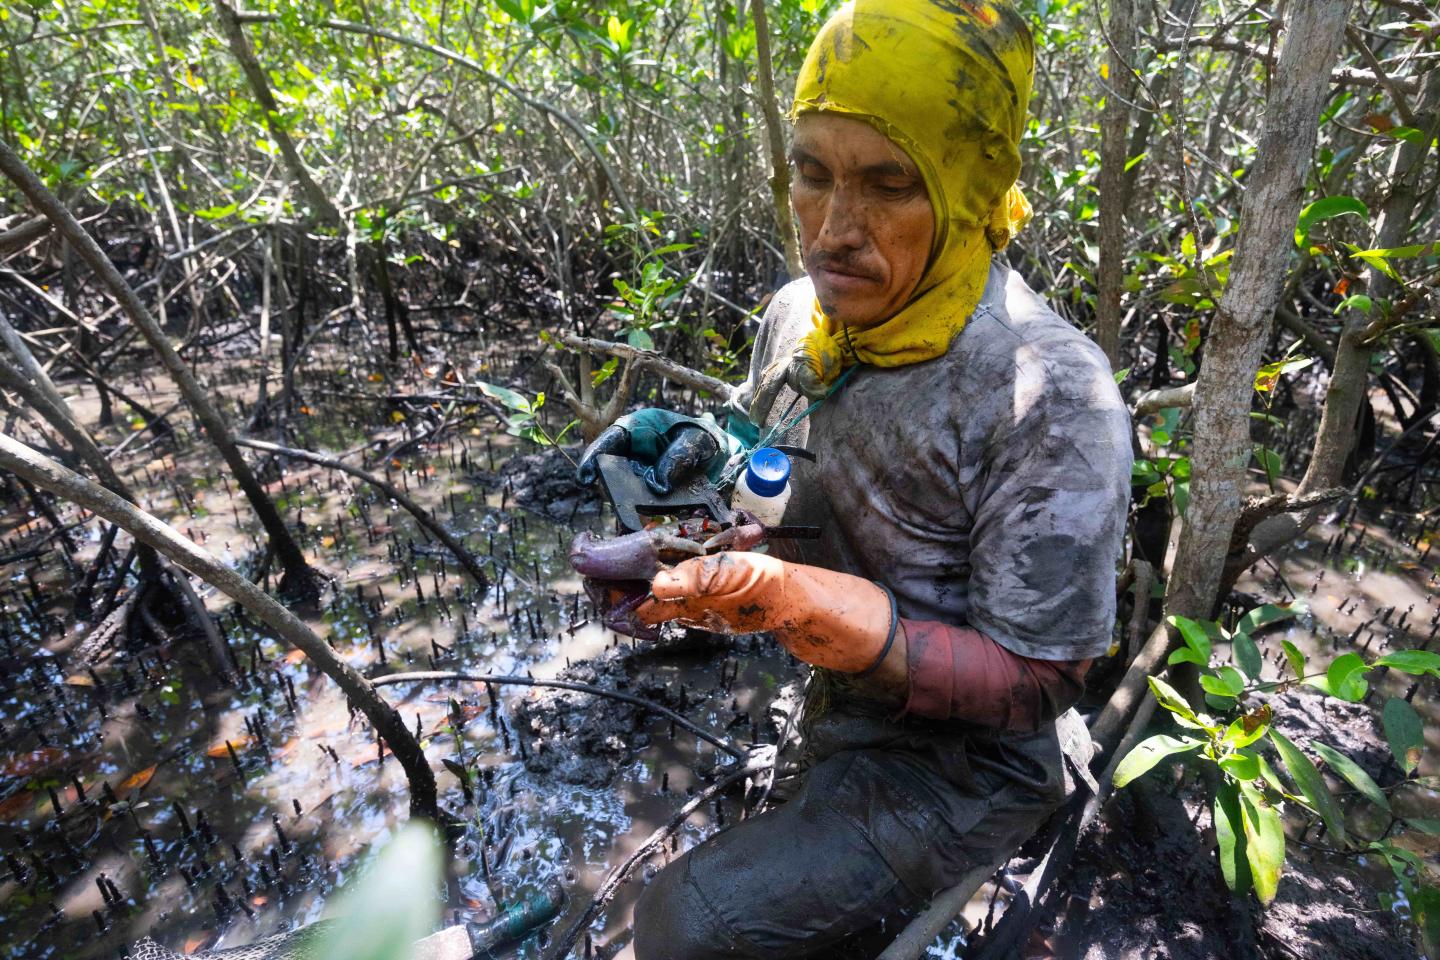  José Ordinola measuring a red crab in a mangrove forest